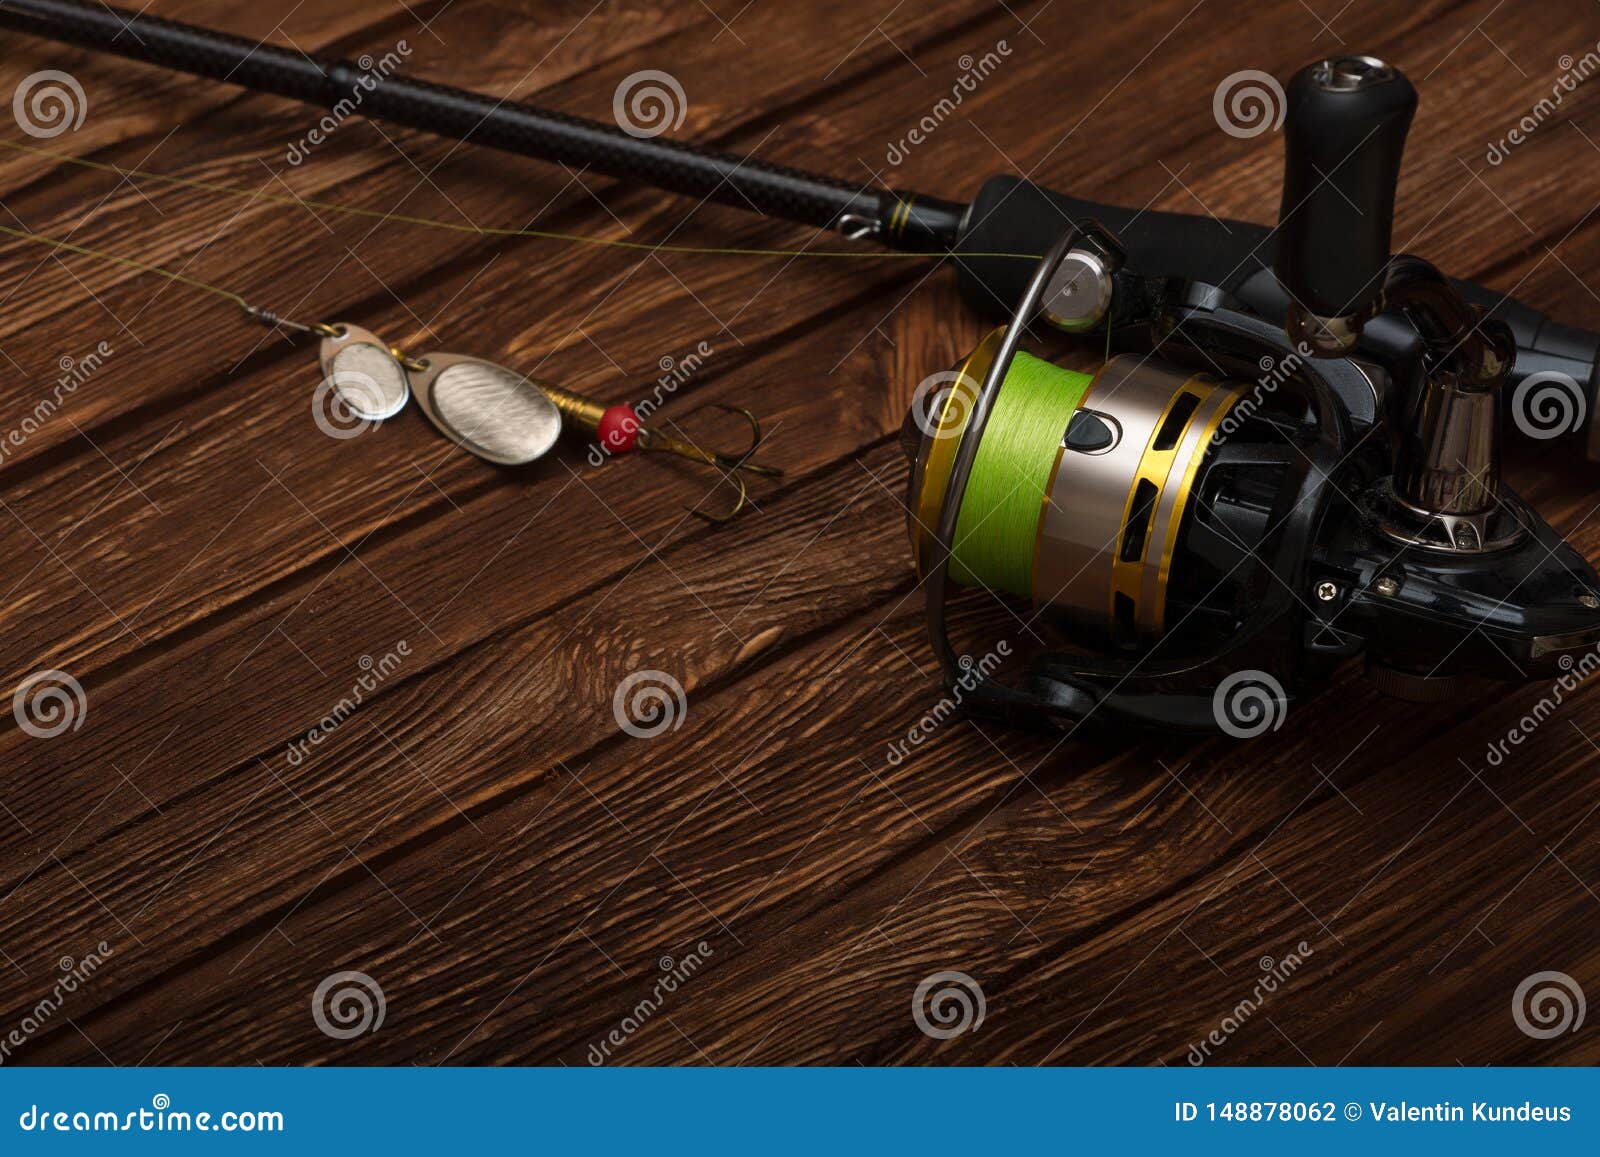 Fishing rod rust фото 70